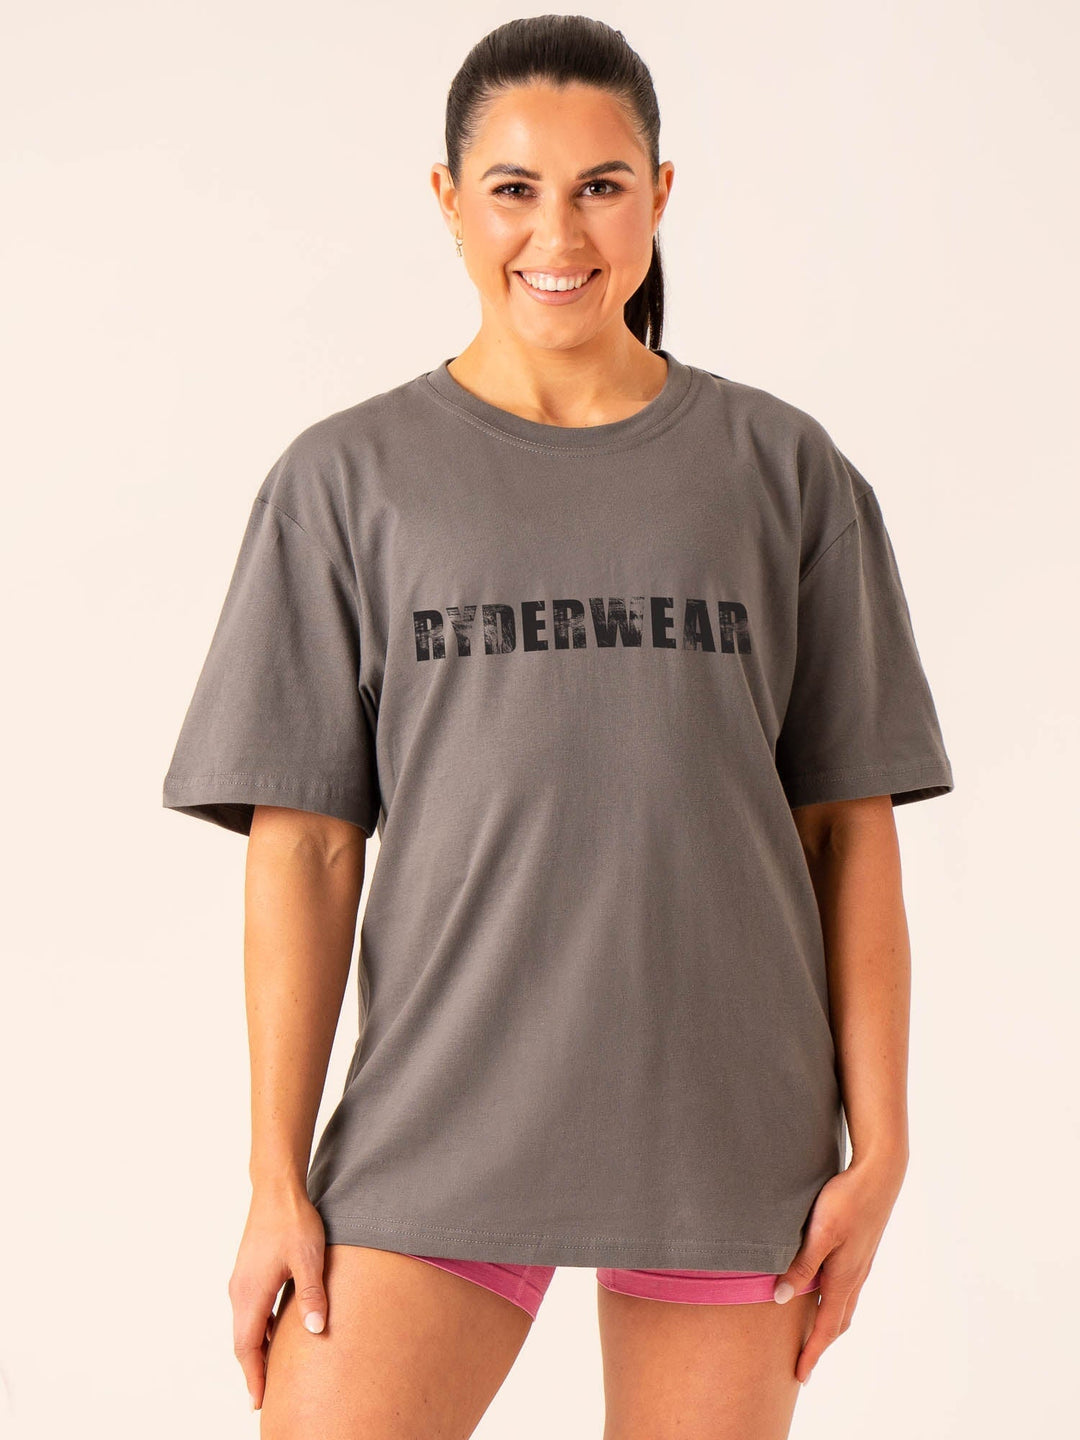 Training T-Shirt - Charcoal Clothing Ryderwear 